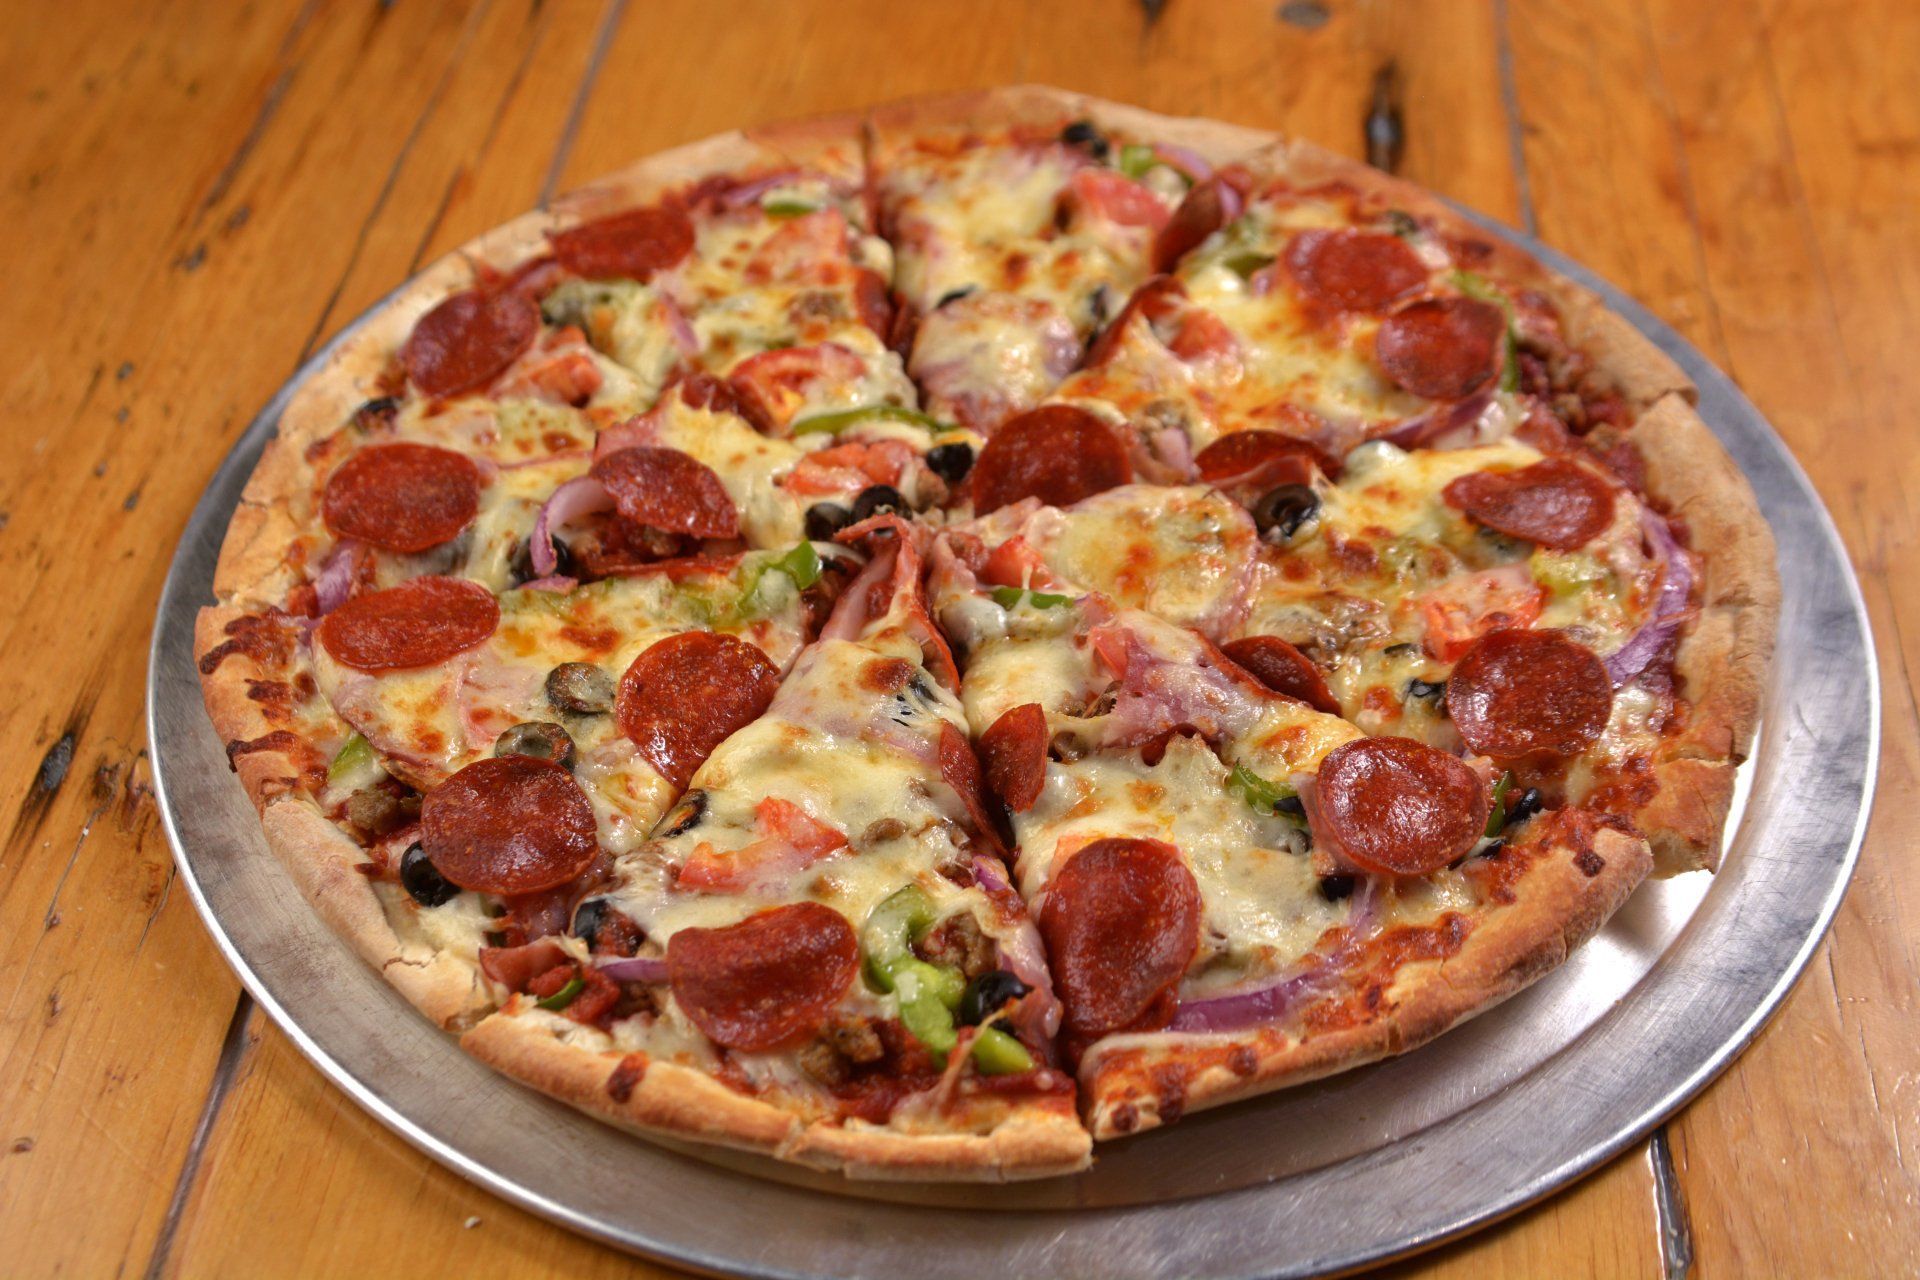 Murphysboro Pizza and Wings | Murphysboro, IL | Whiffle Boy's Pizza